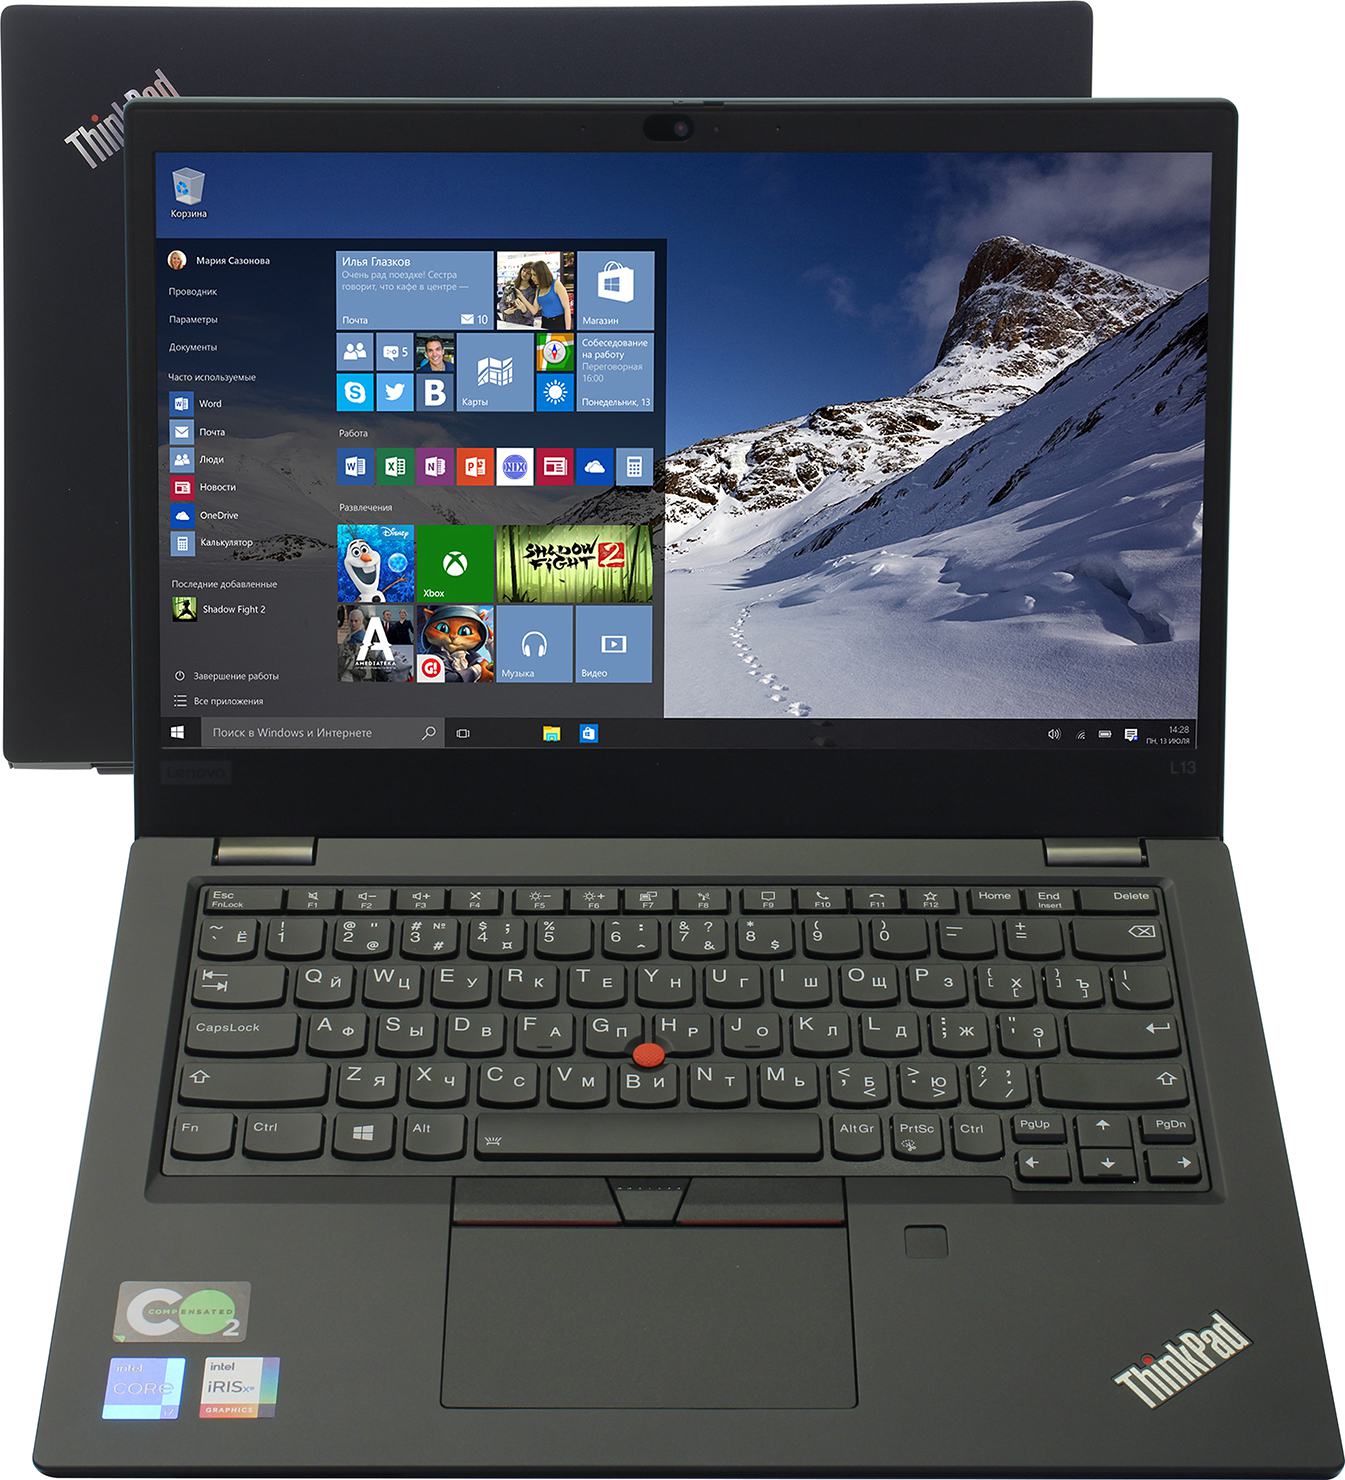 Купить Ноутбук Lenovo Core I7